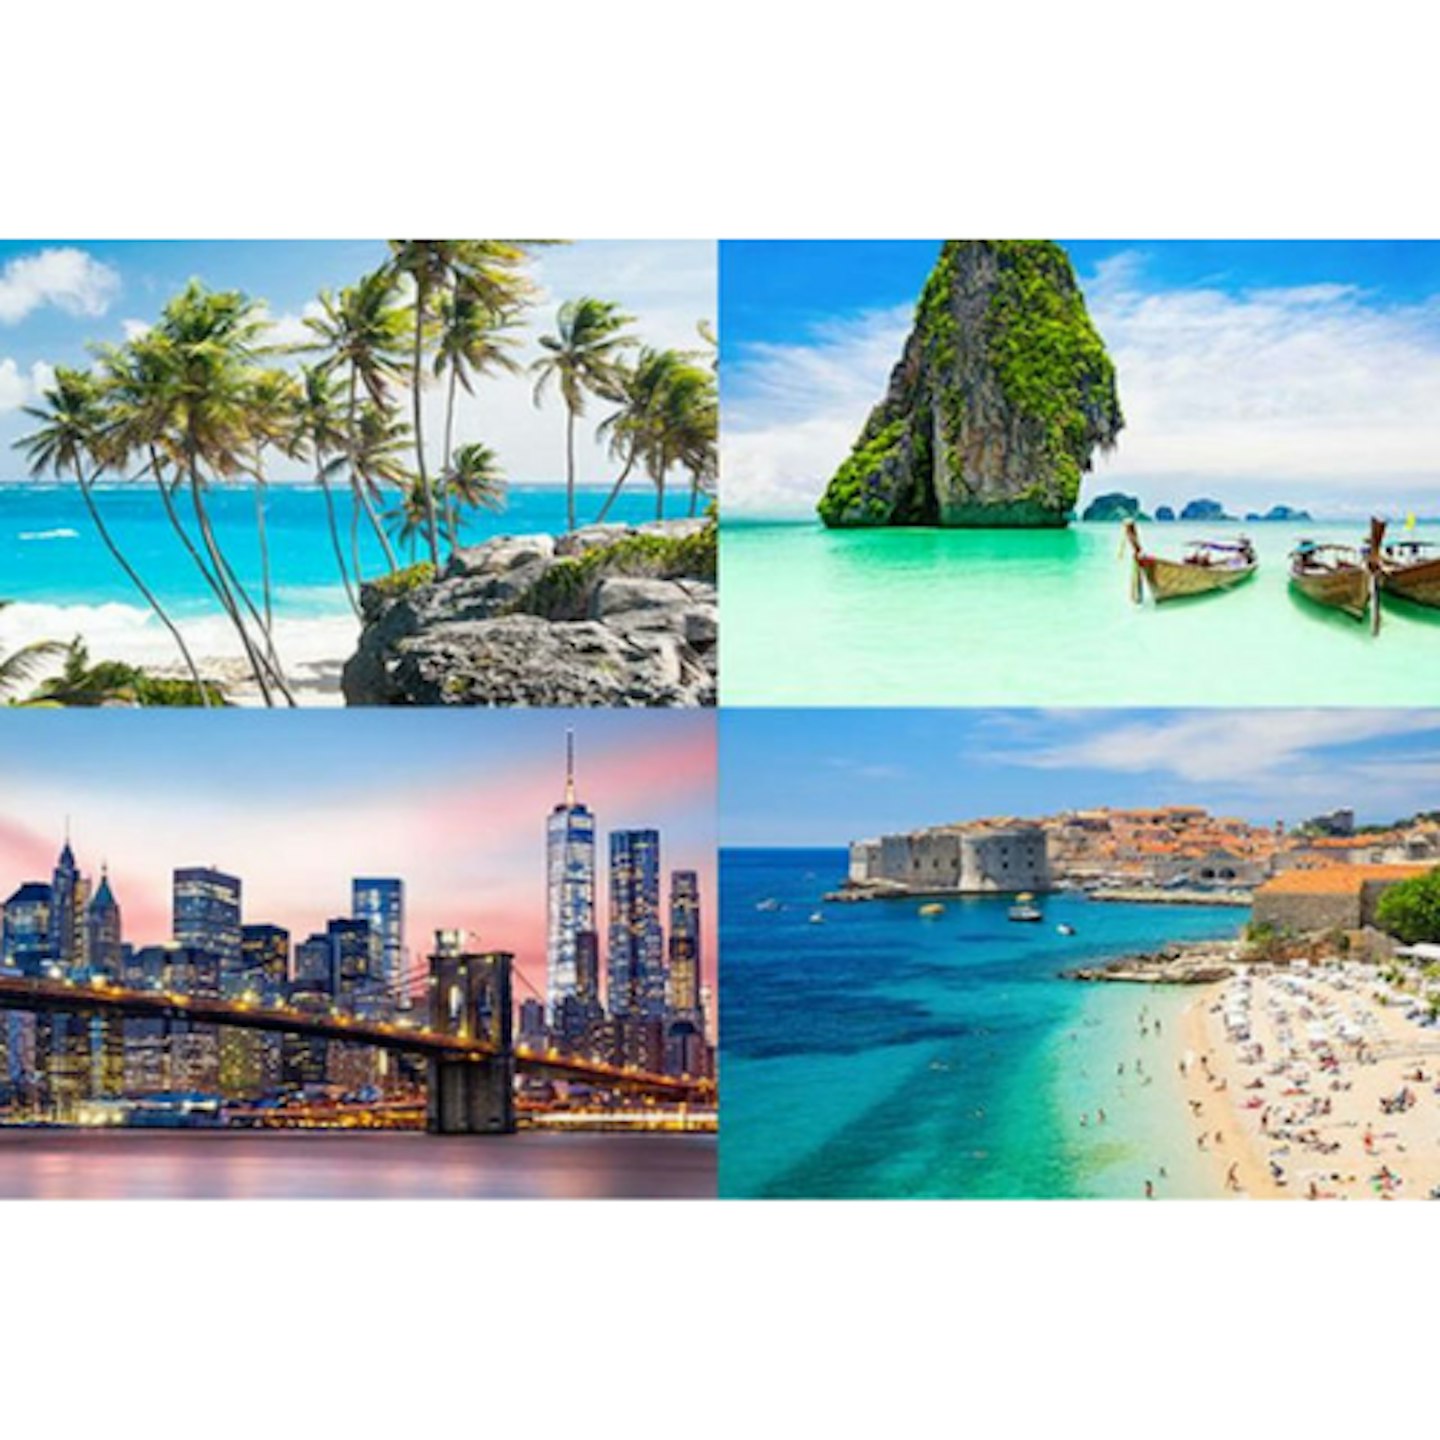 Mystery Holiday - Barbados, New York, Dubai, and More